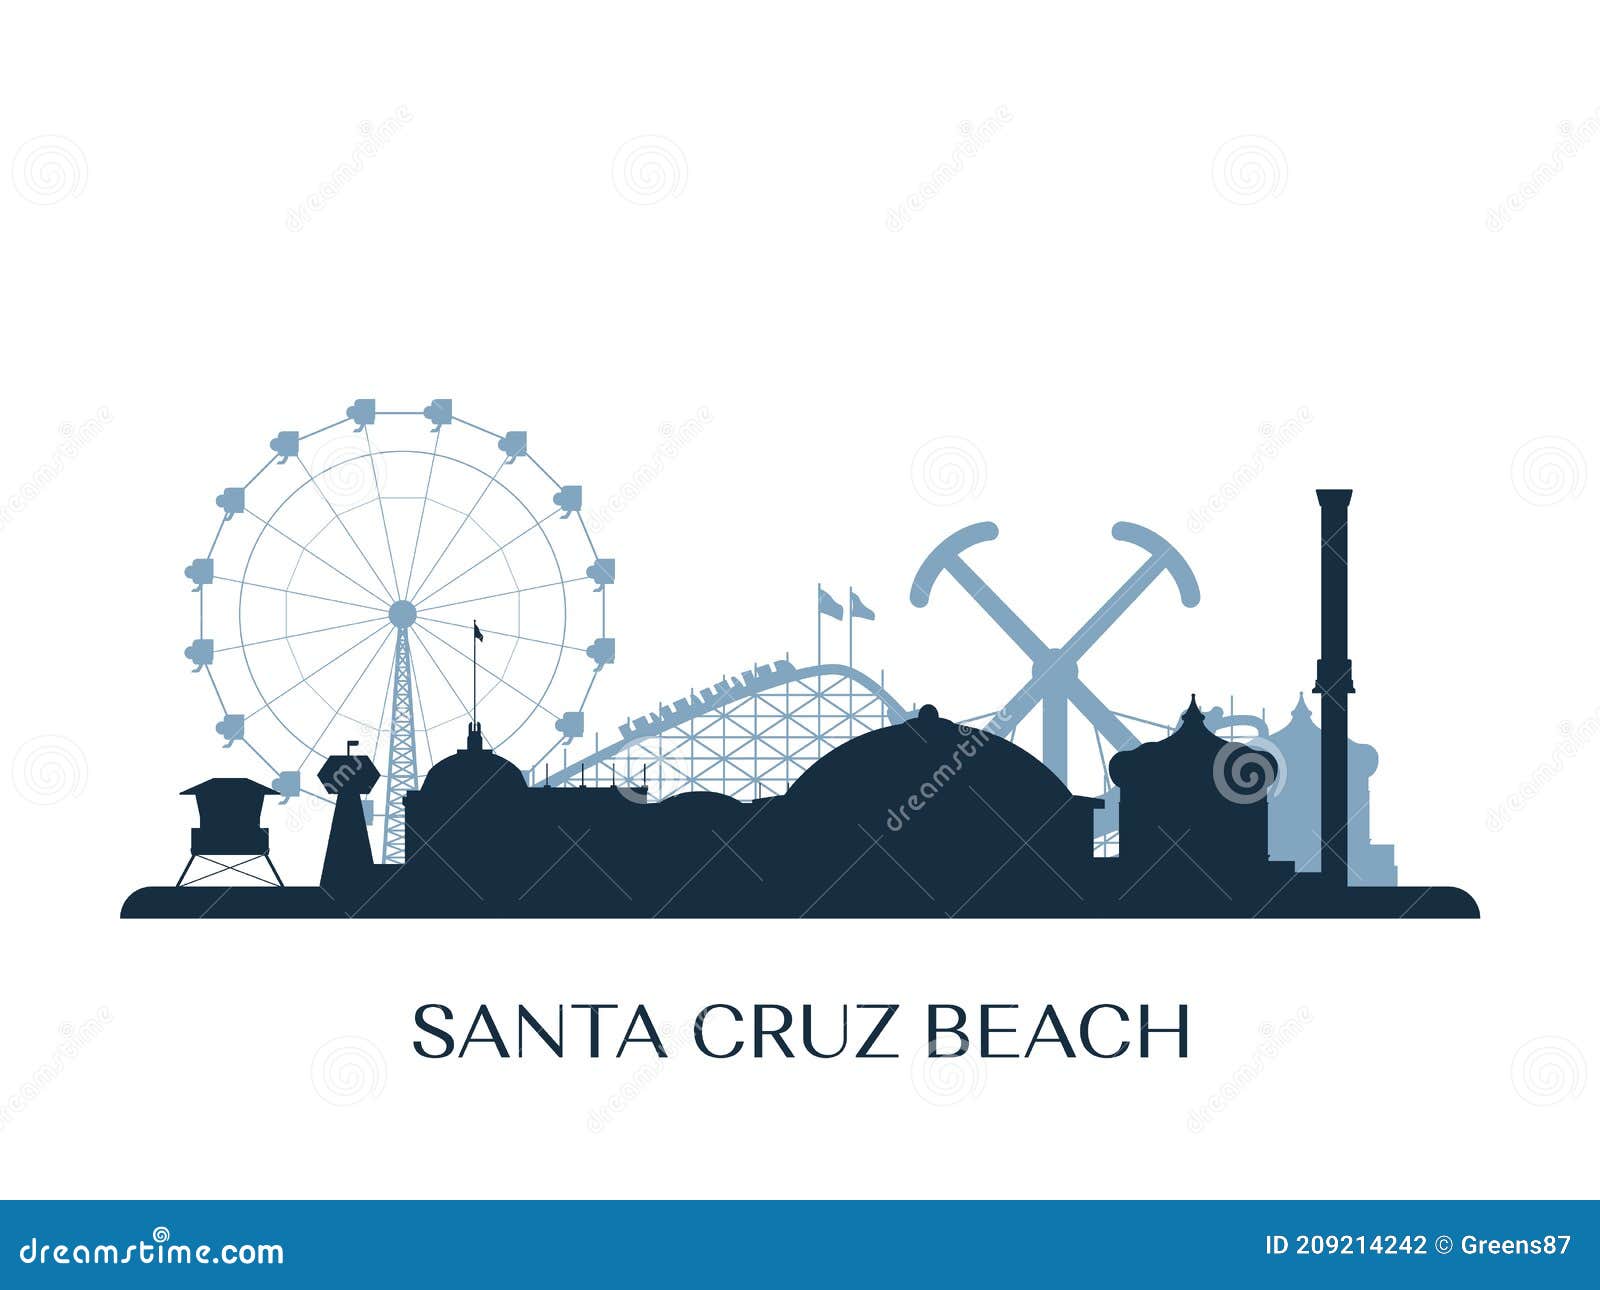 santa cruz beach boardwalk monochrome silhouette.